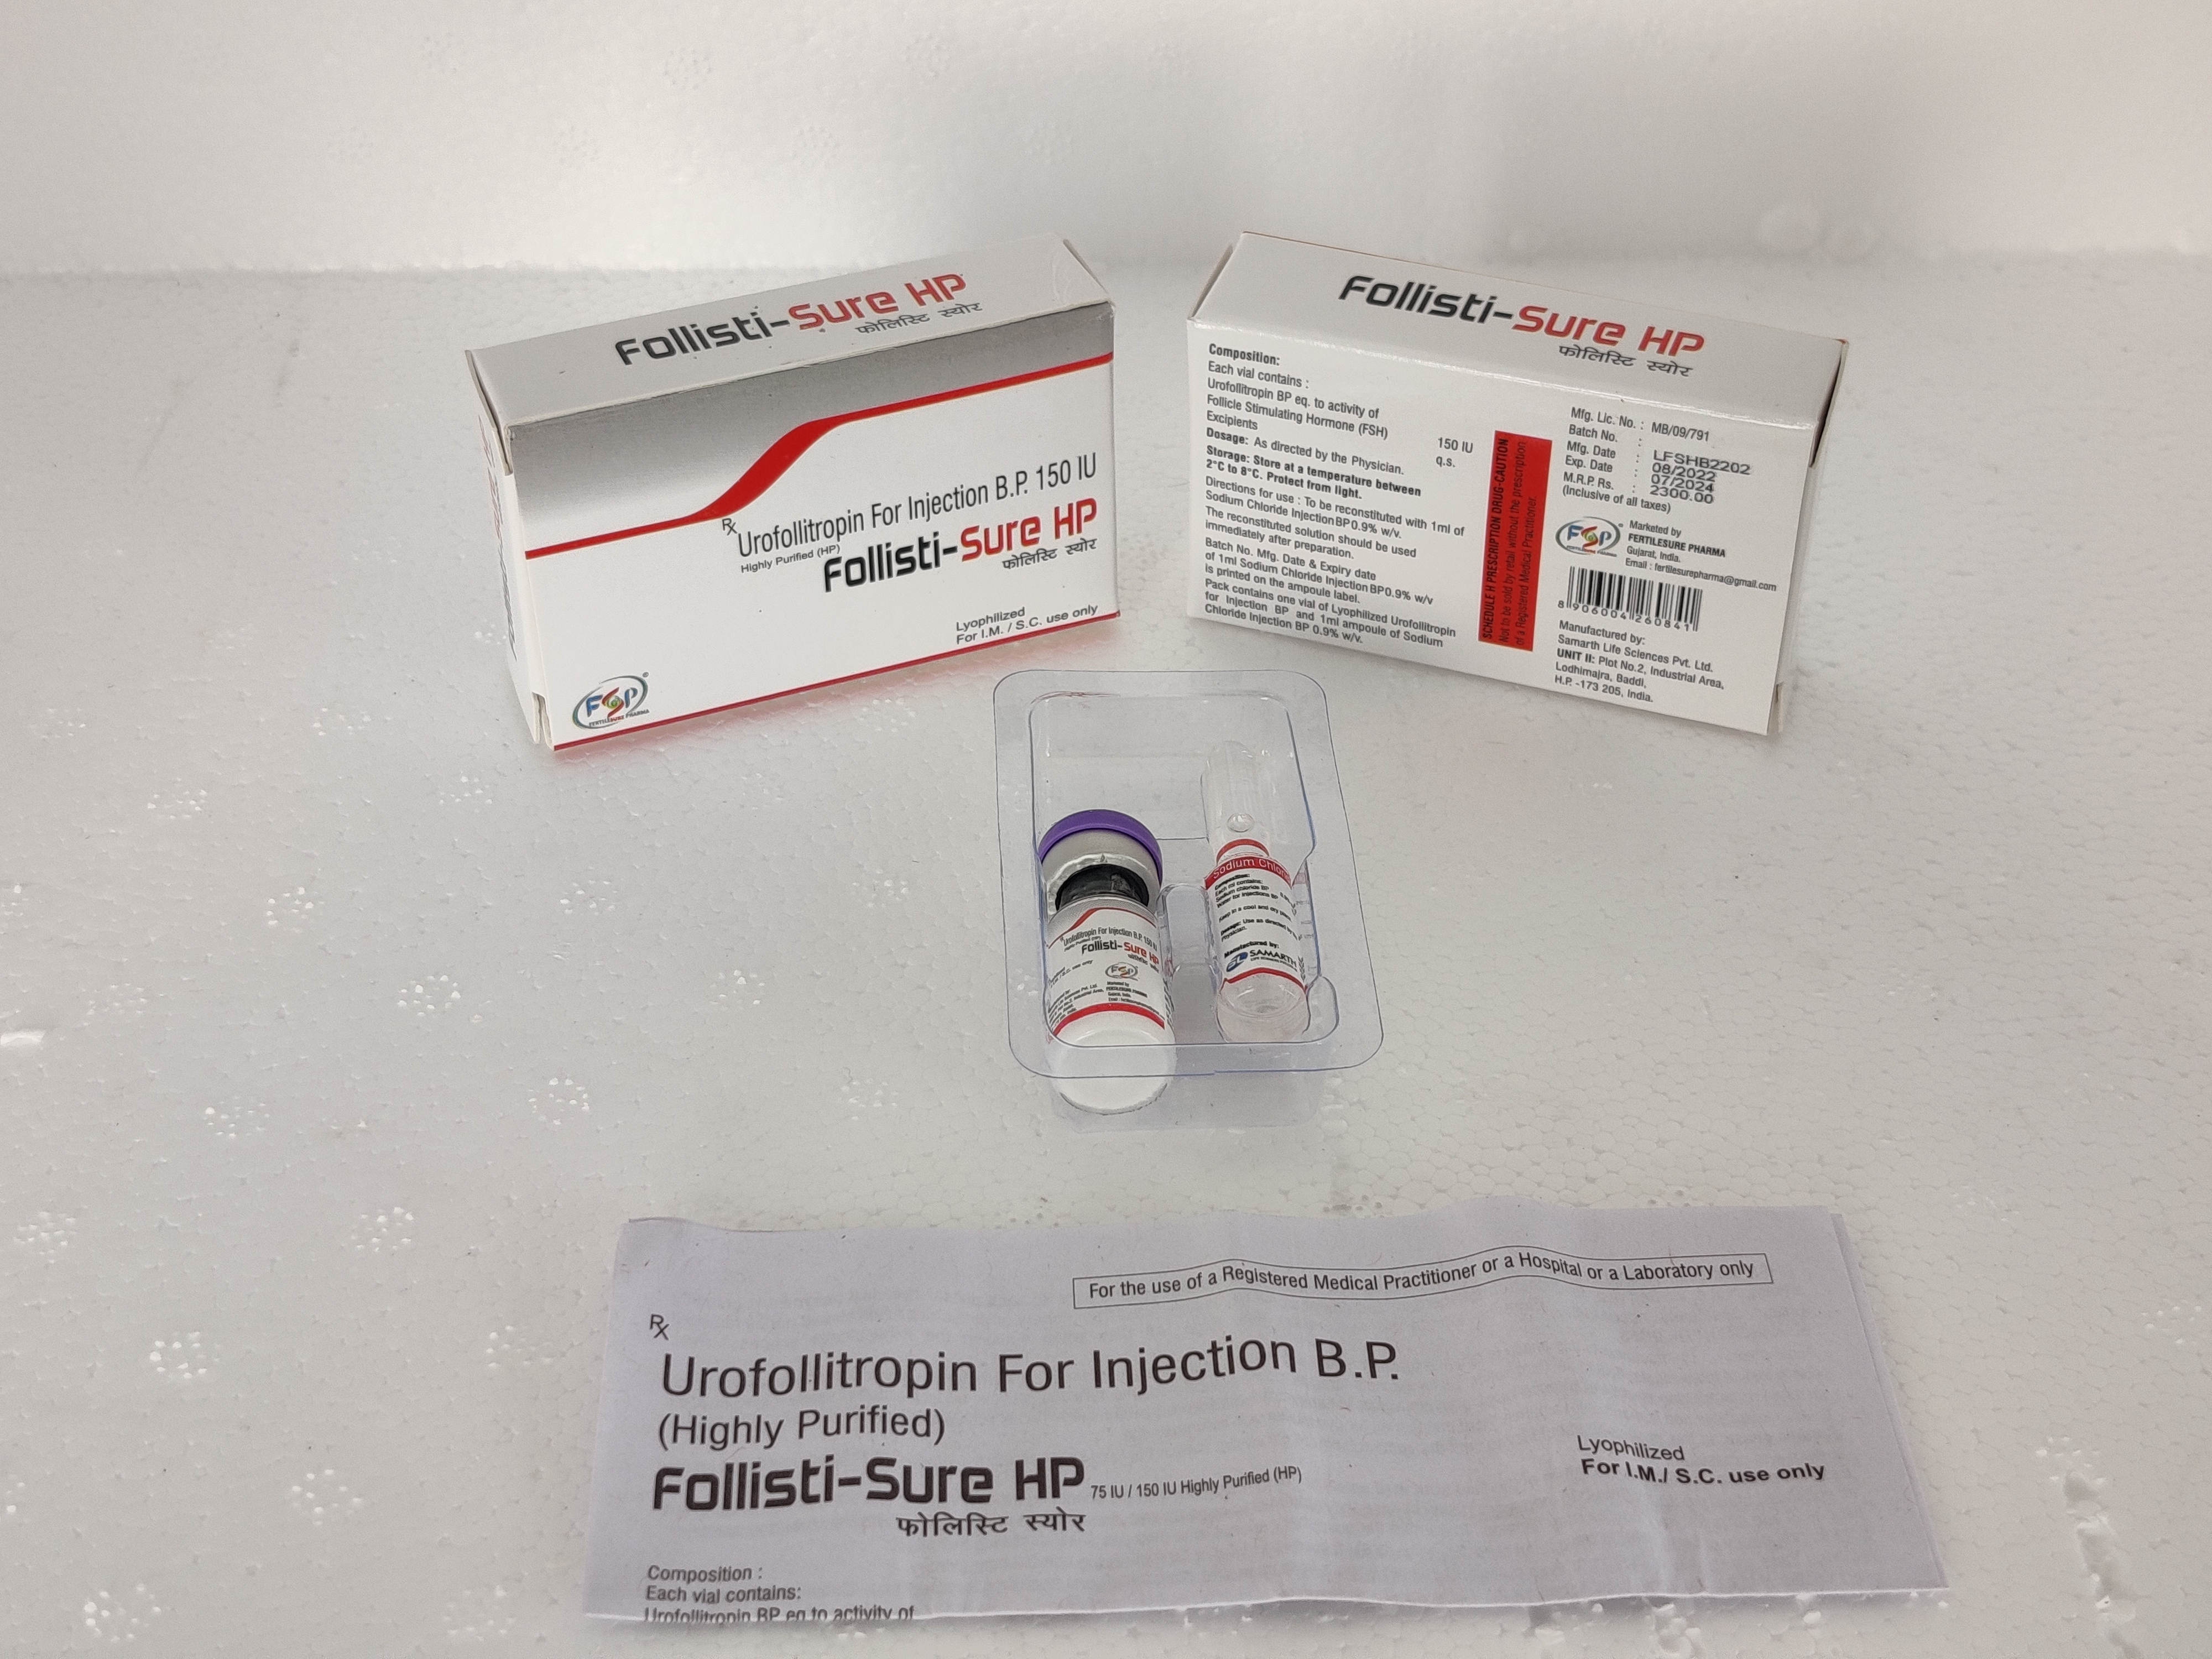 Follisti-sure Hp 75 Iu Injection (FSH injection 75 IU)